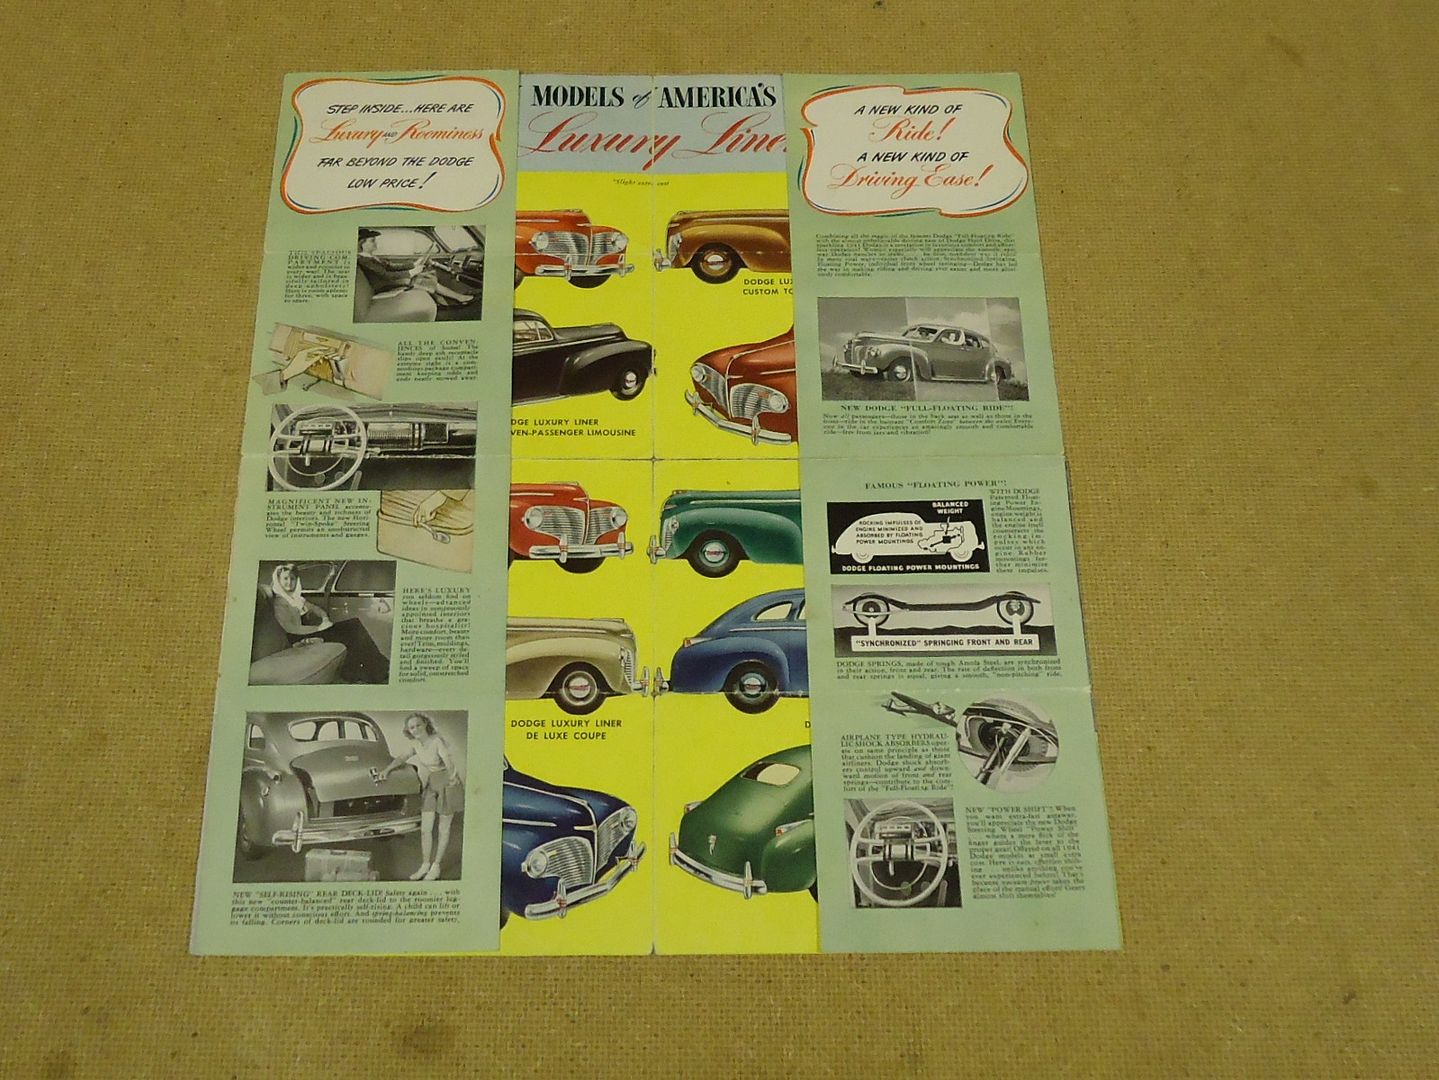 Dodge Vintage 1940s Brochure 19in x 13 5in Yellow Red Luxury Liner Paper